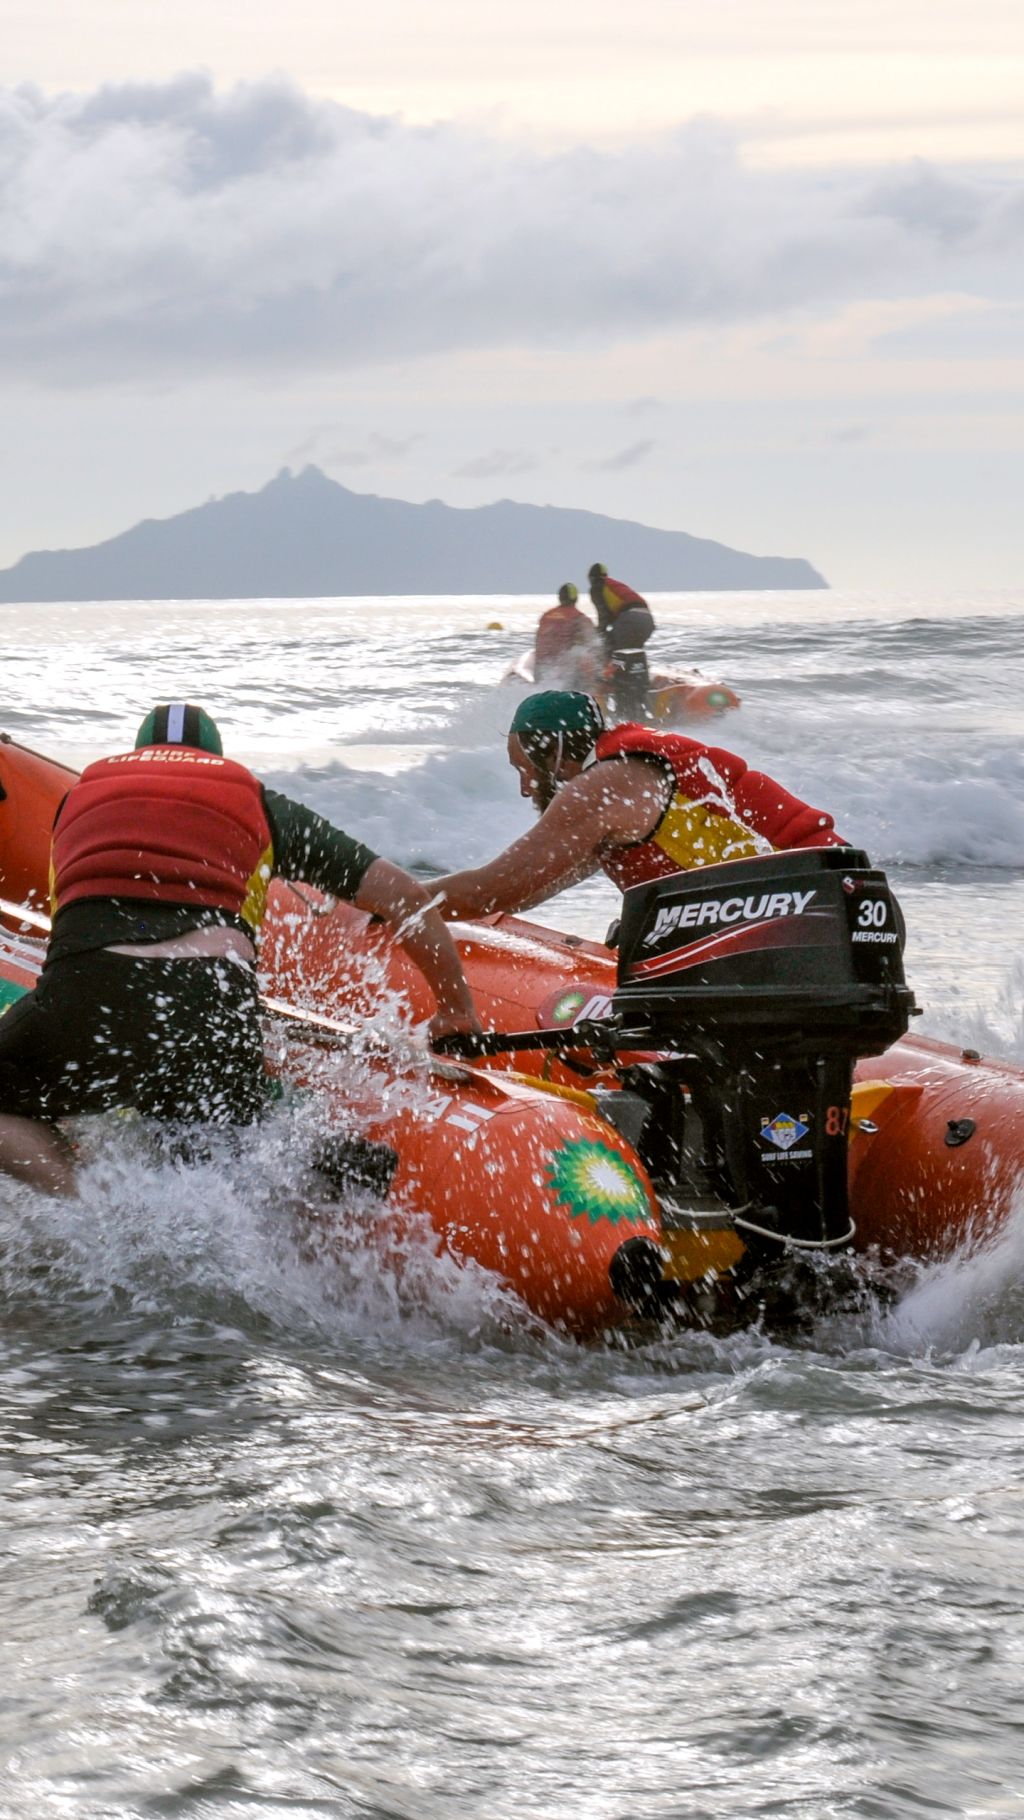 BP and Surf Life Saving NZ celebrate 50 years of partnership